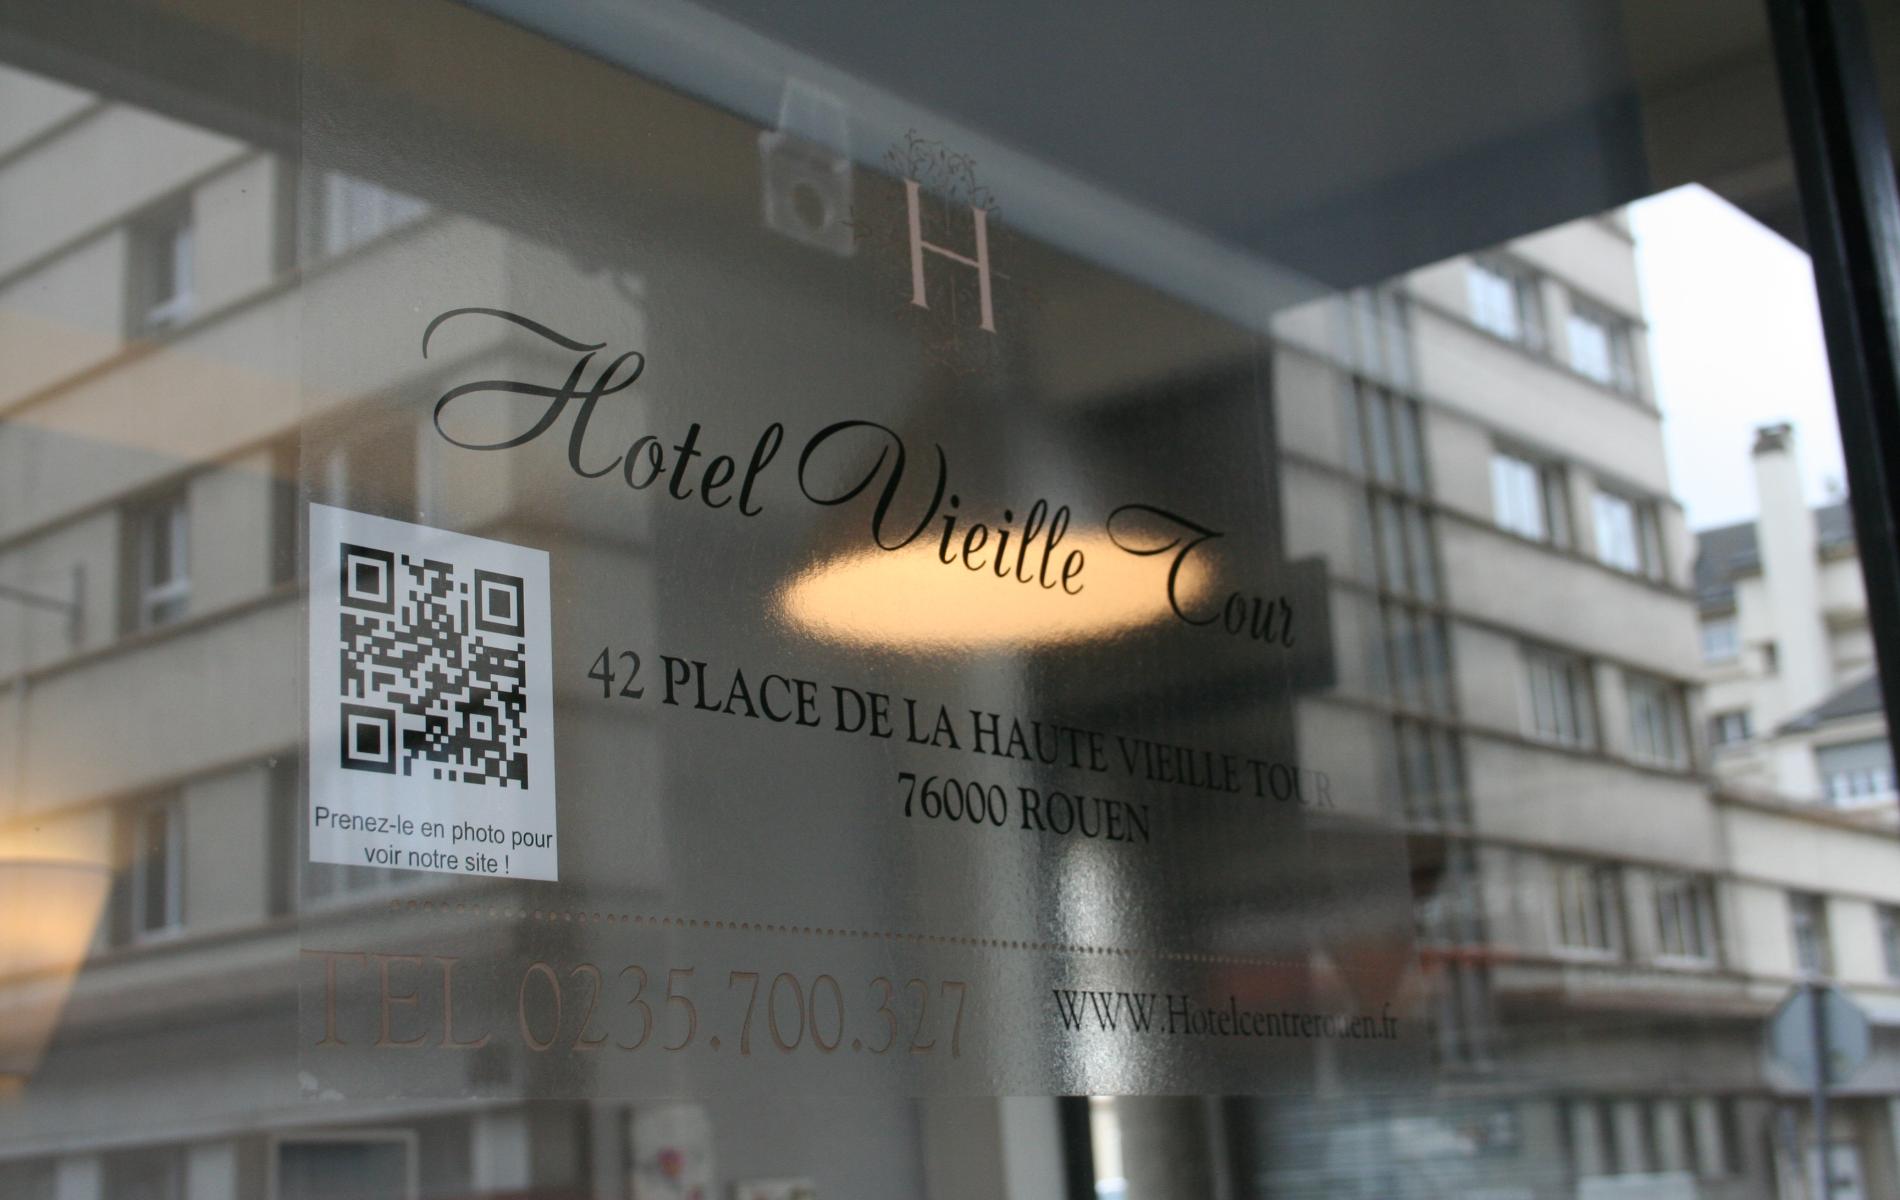 Hotel Vieille Tour - Hotel en Normandie